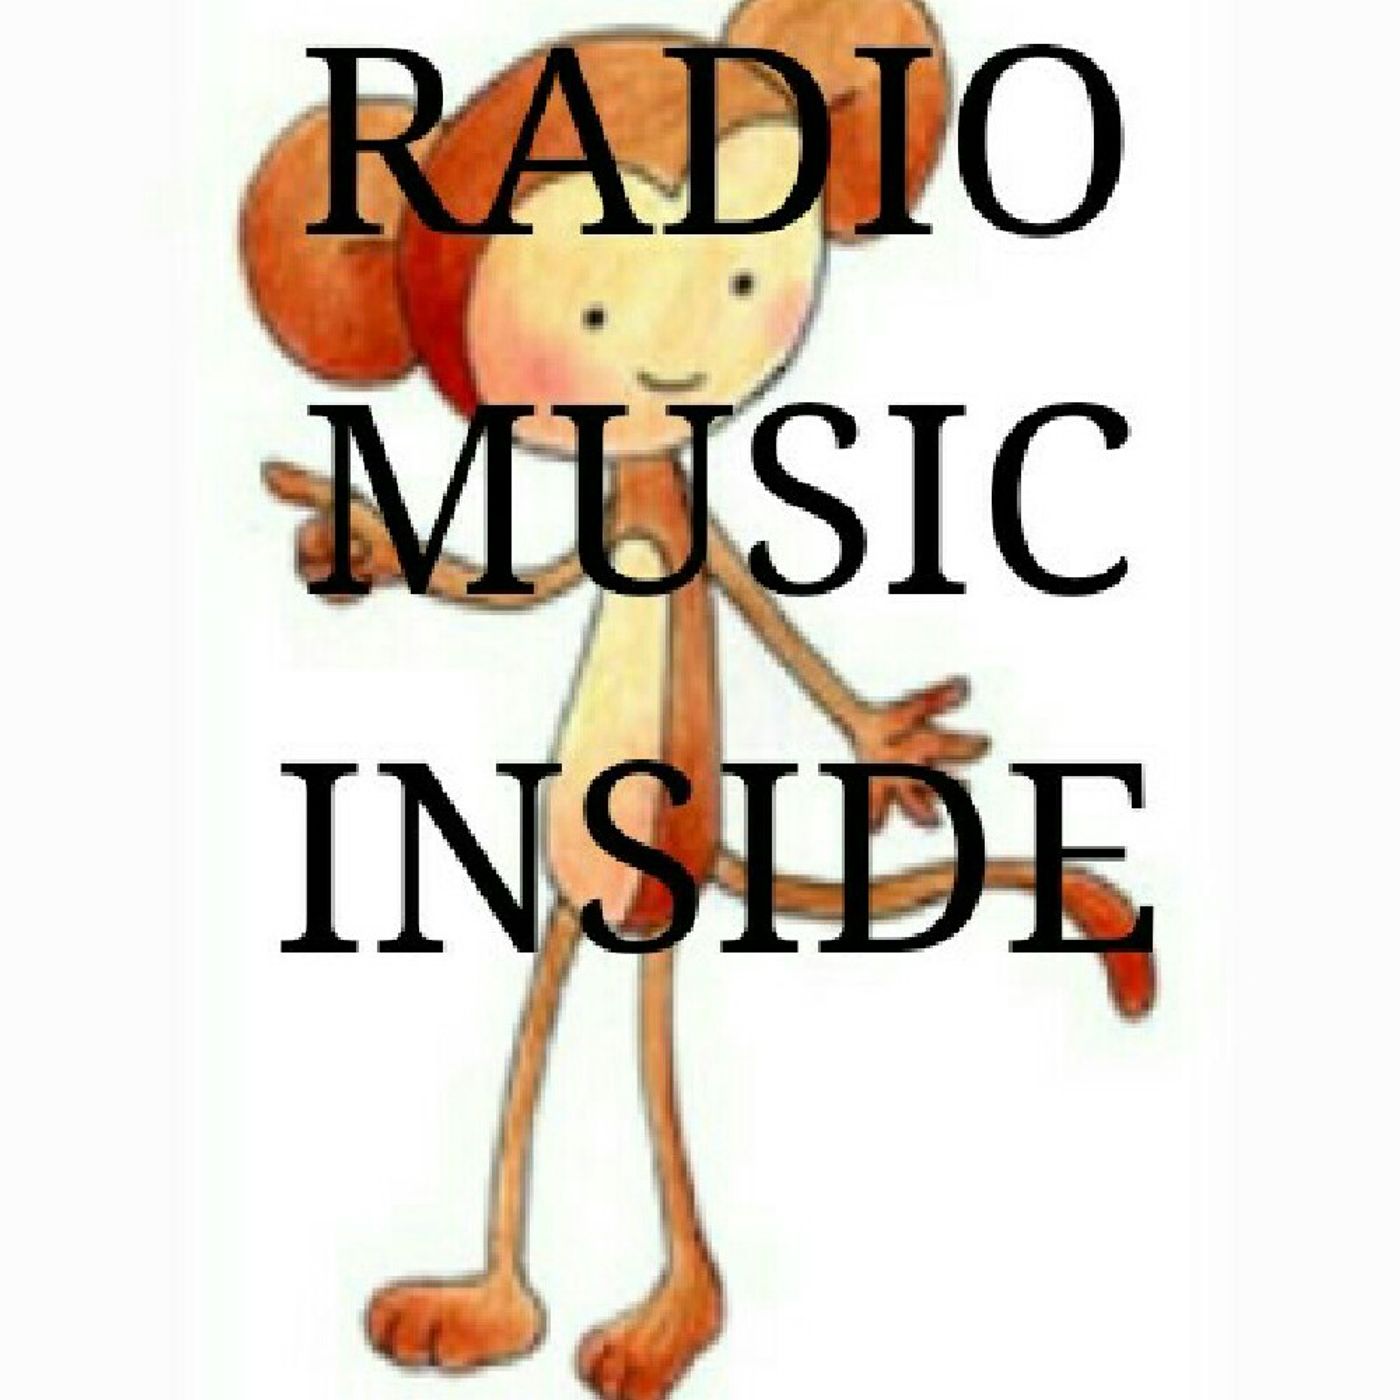 Radio Music Inside